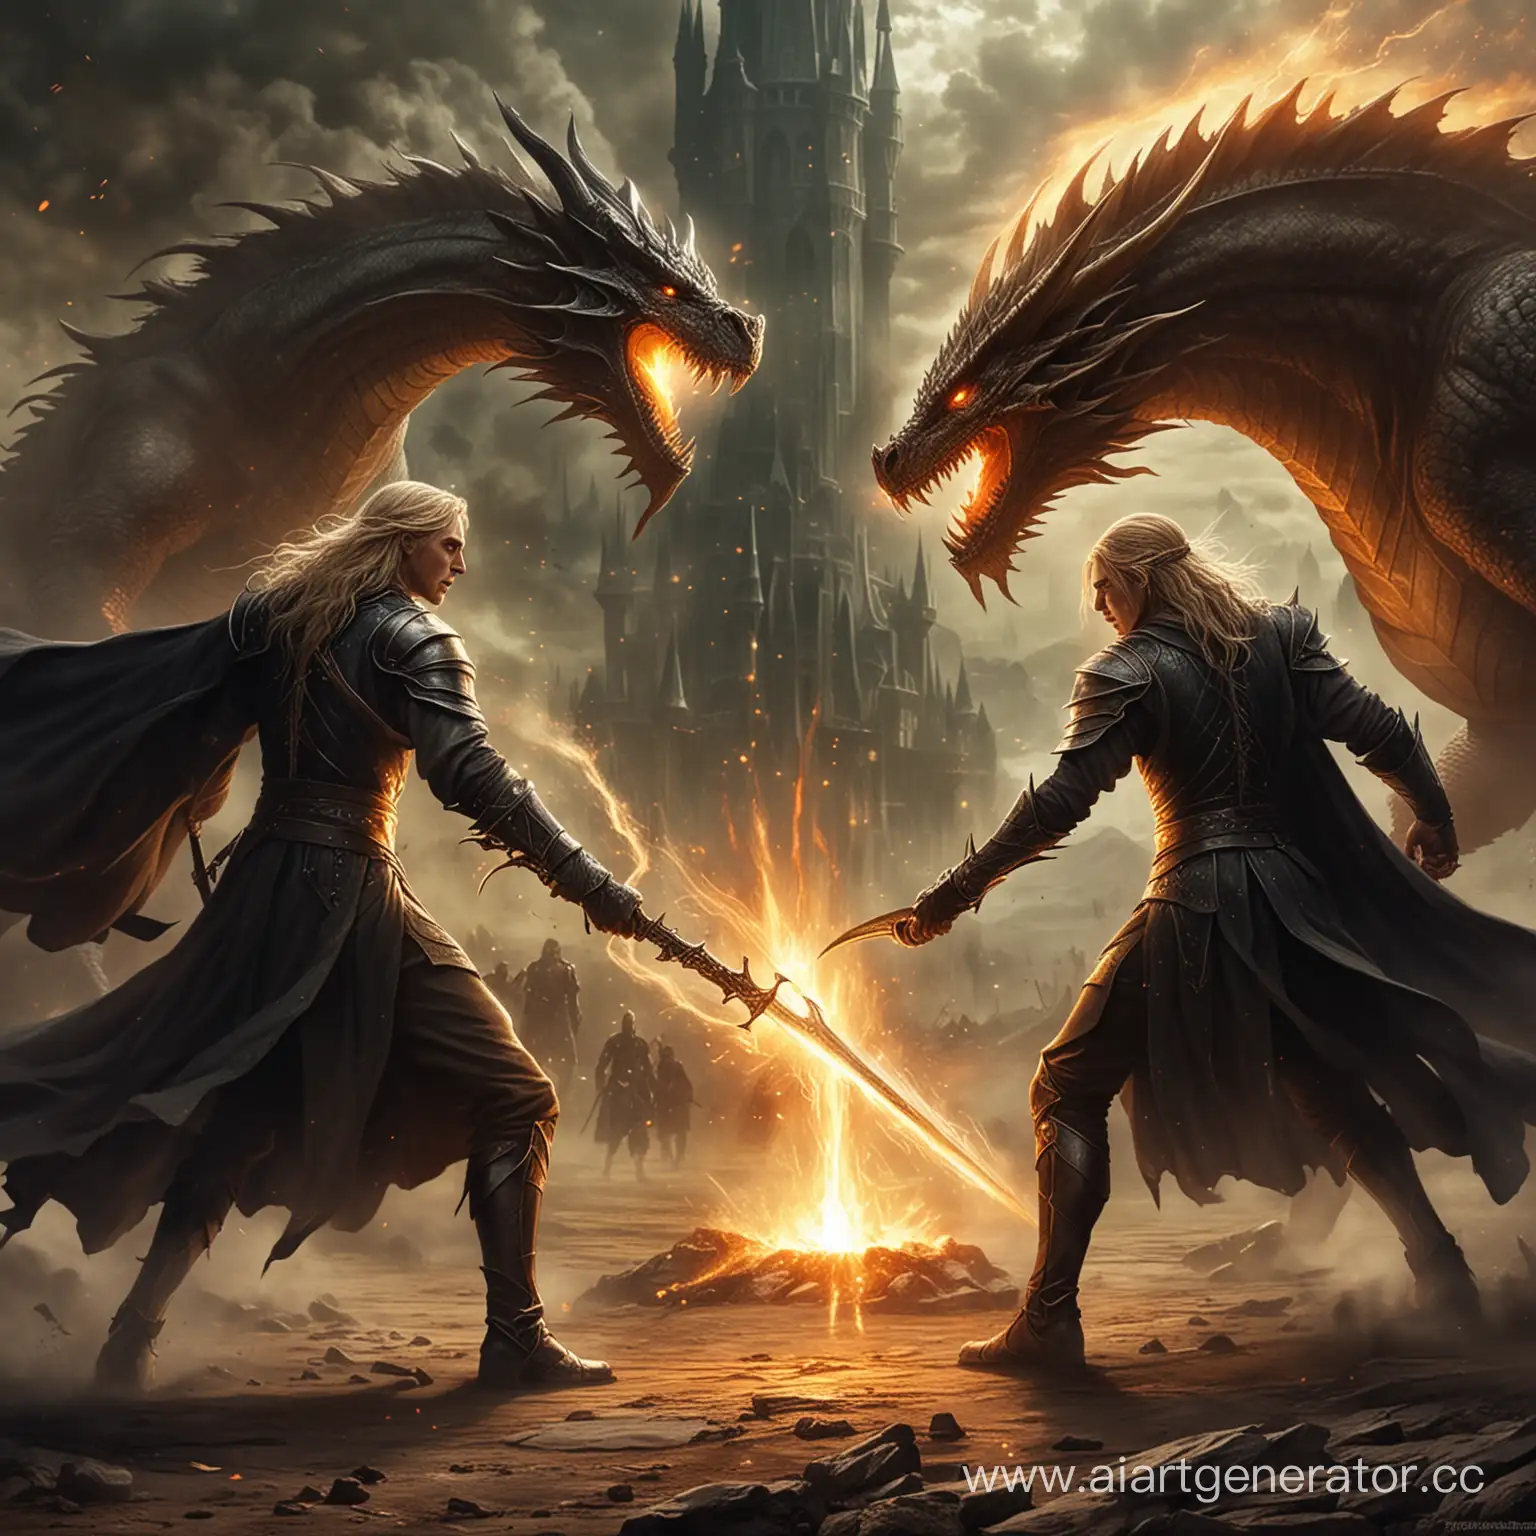 Epic-Battle-Finrod-the-Golden-Dragon-versus-Sauron-the-Black-Mage